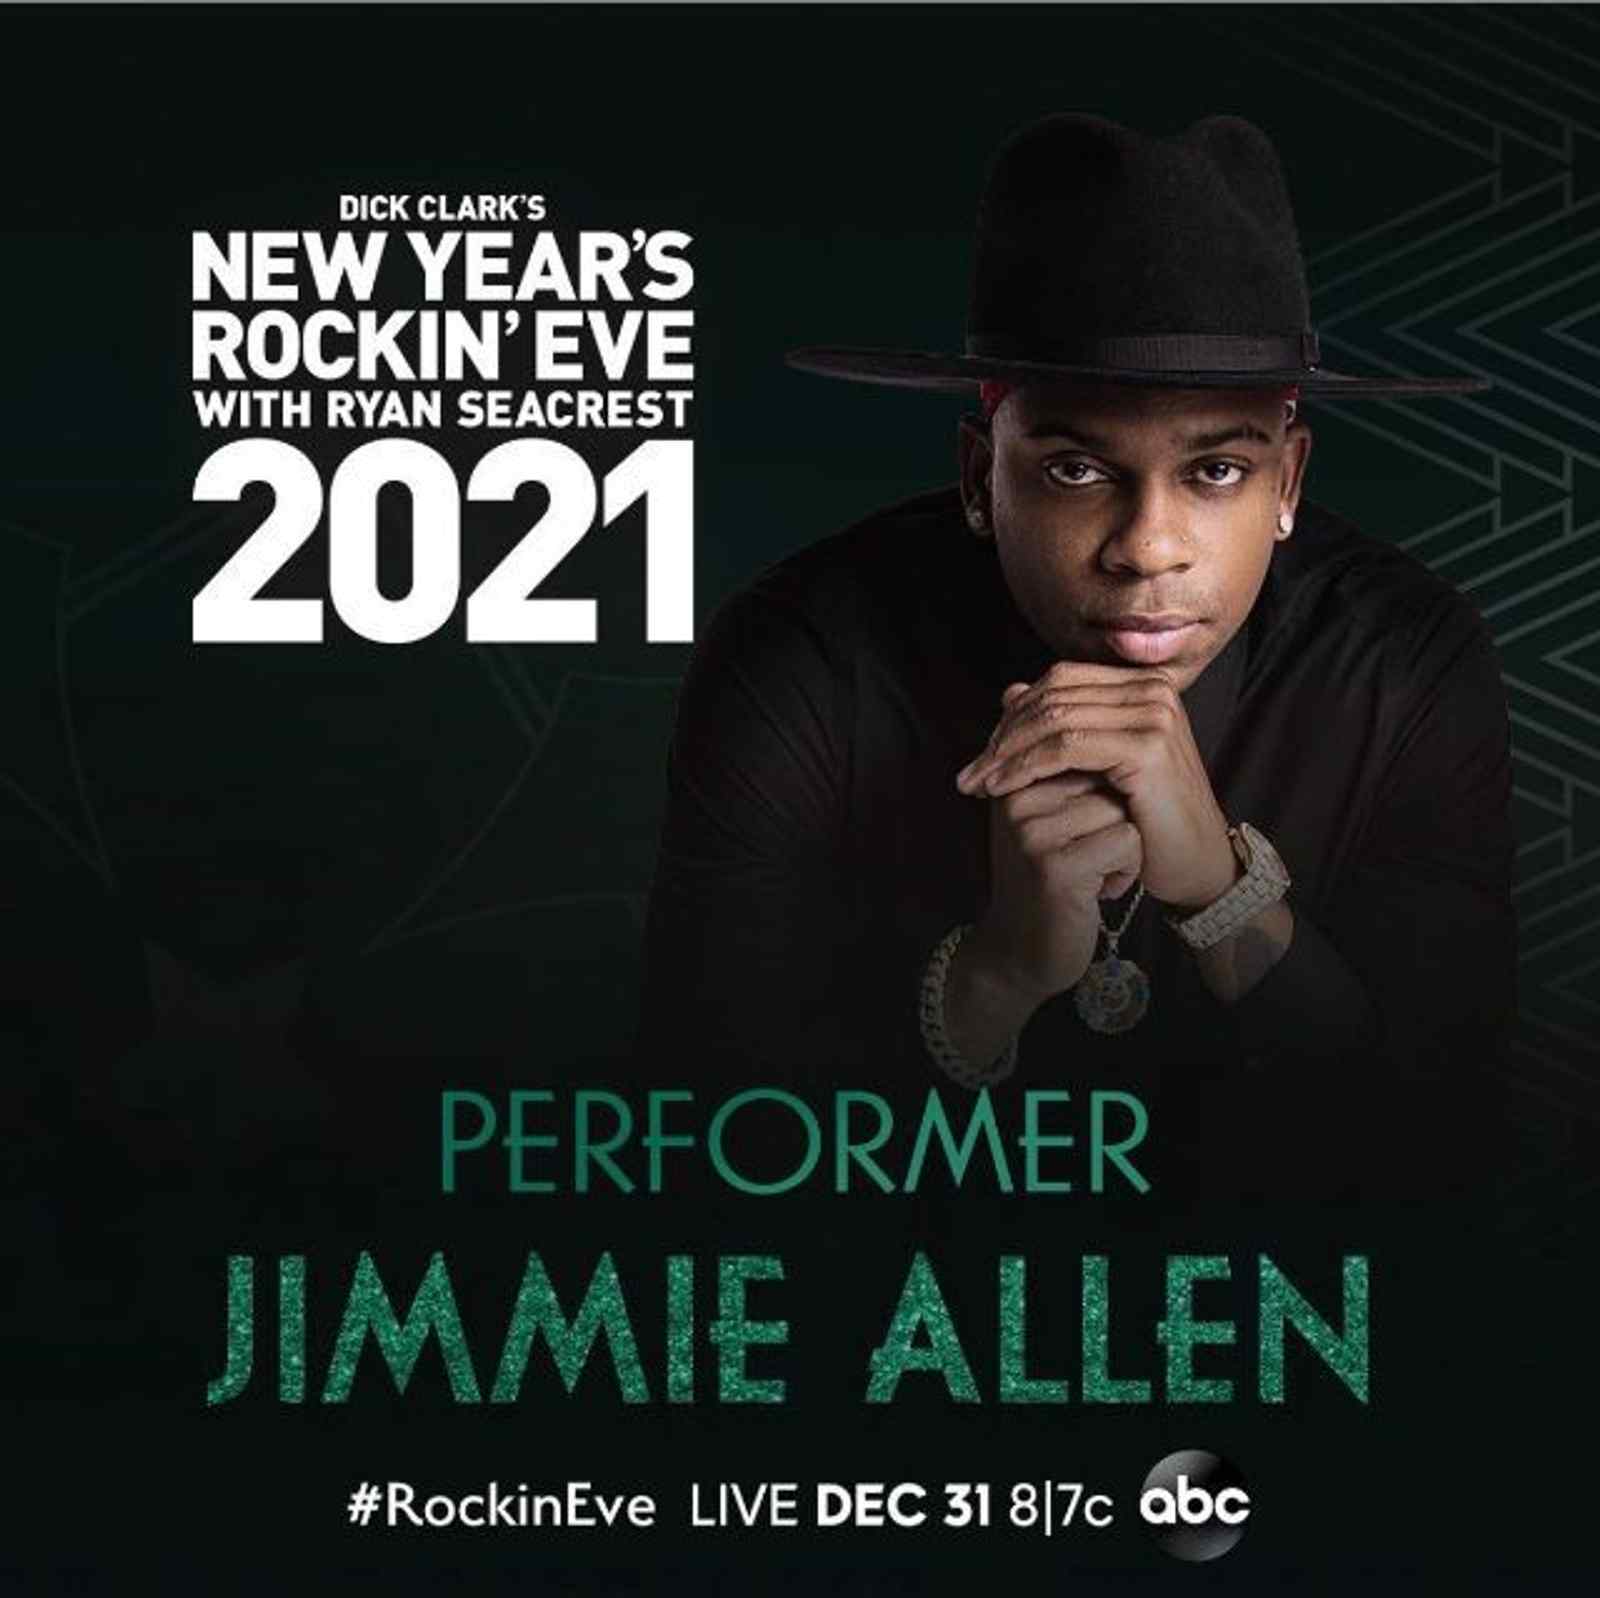 Dick Clark's New Year's Rockin' Eve with Ryan Seacrest 2021: Jimmie Allen